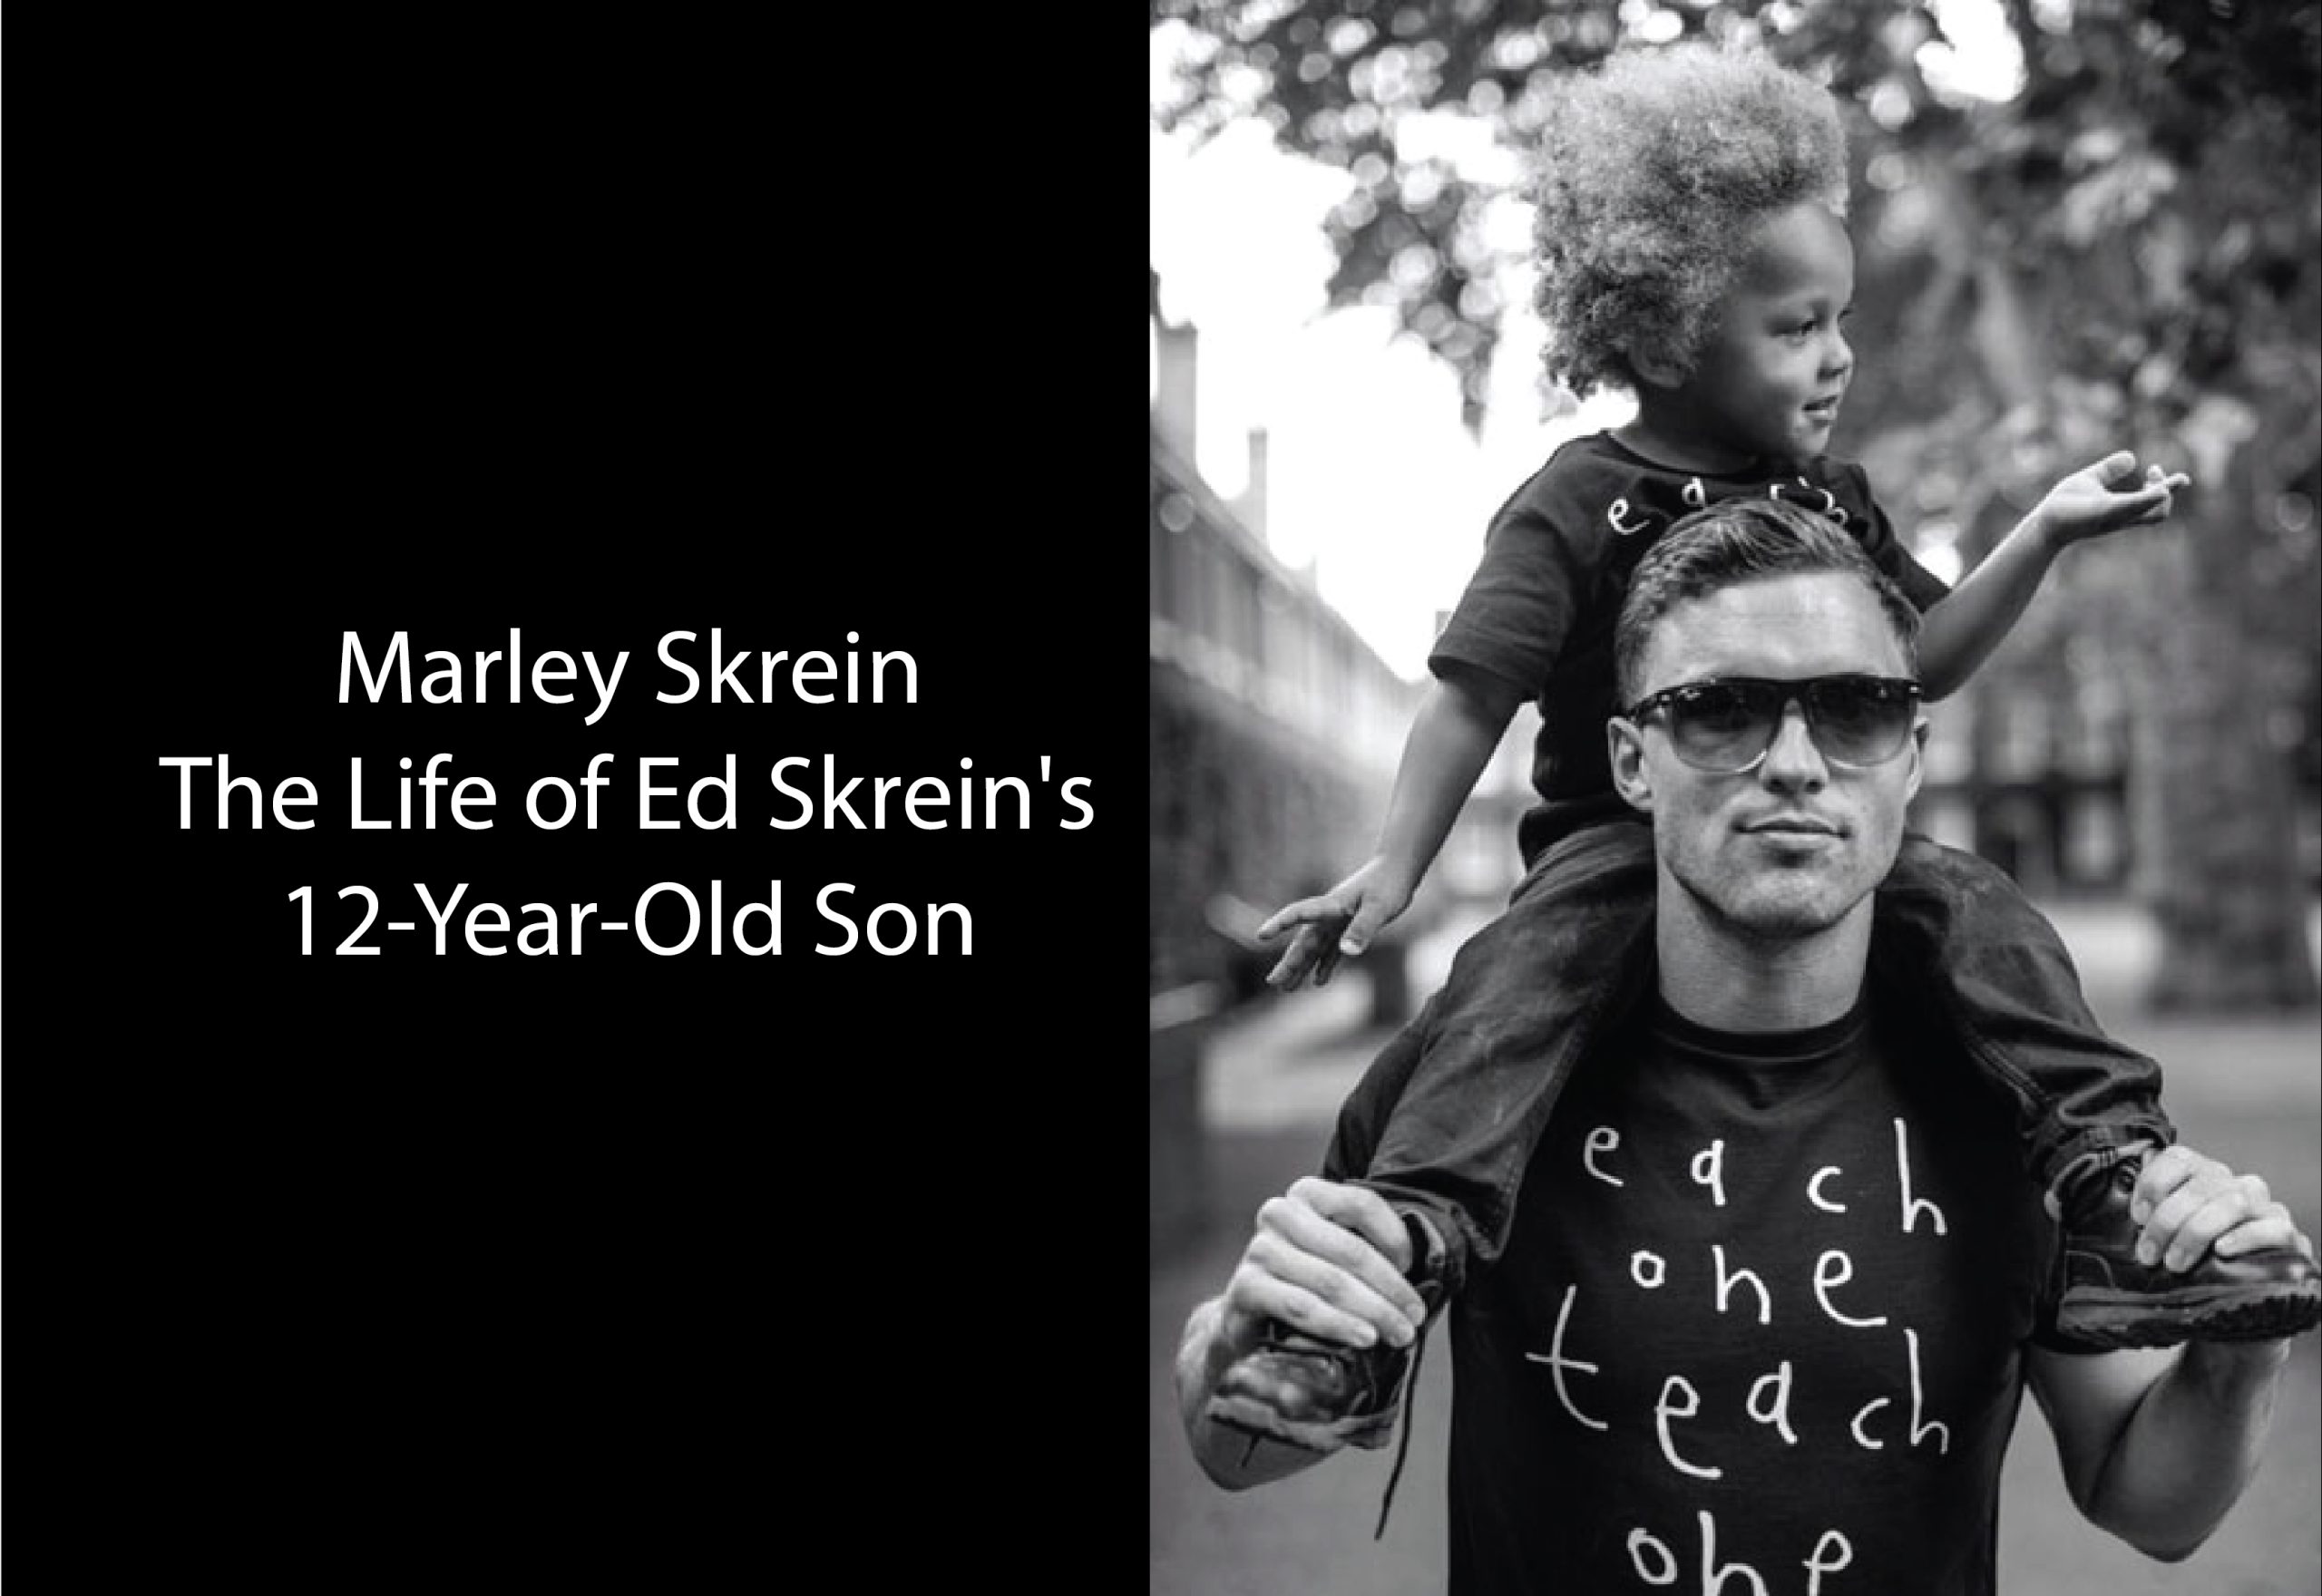 Marley Skrein: the Life of Ed Skrein's 12-Year-Old Son